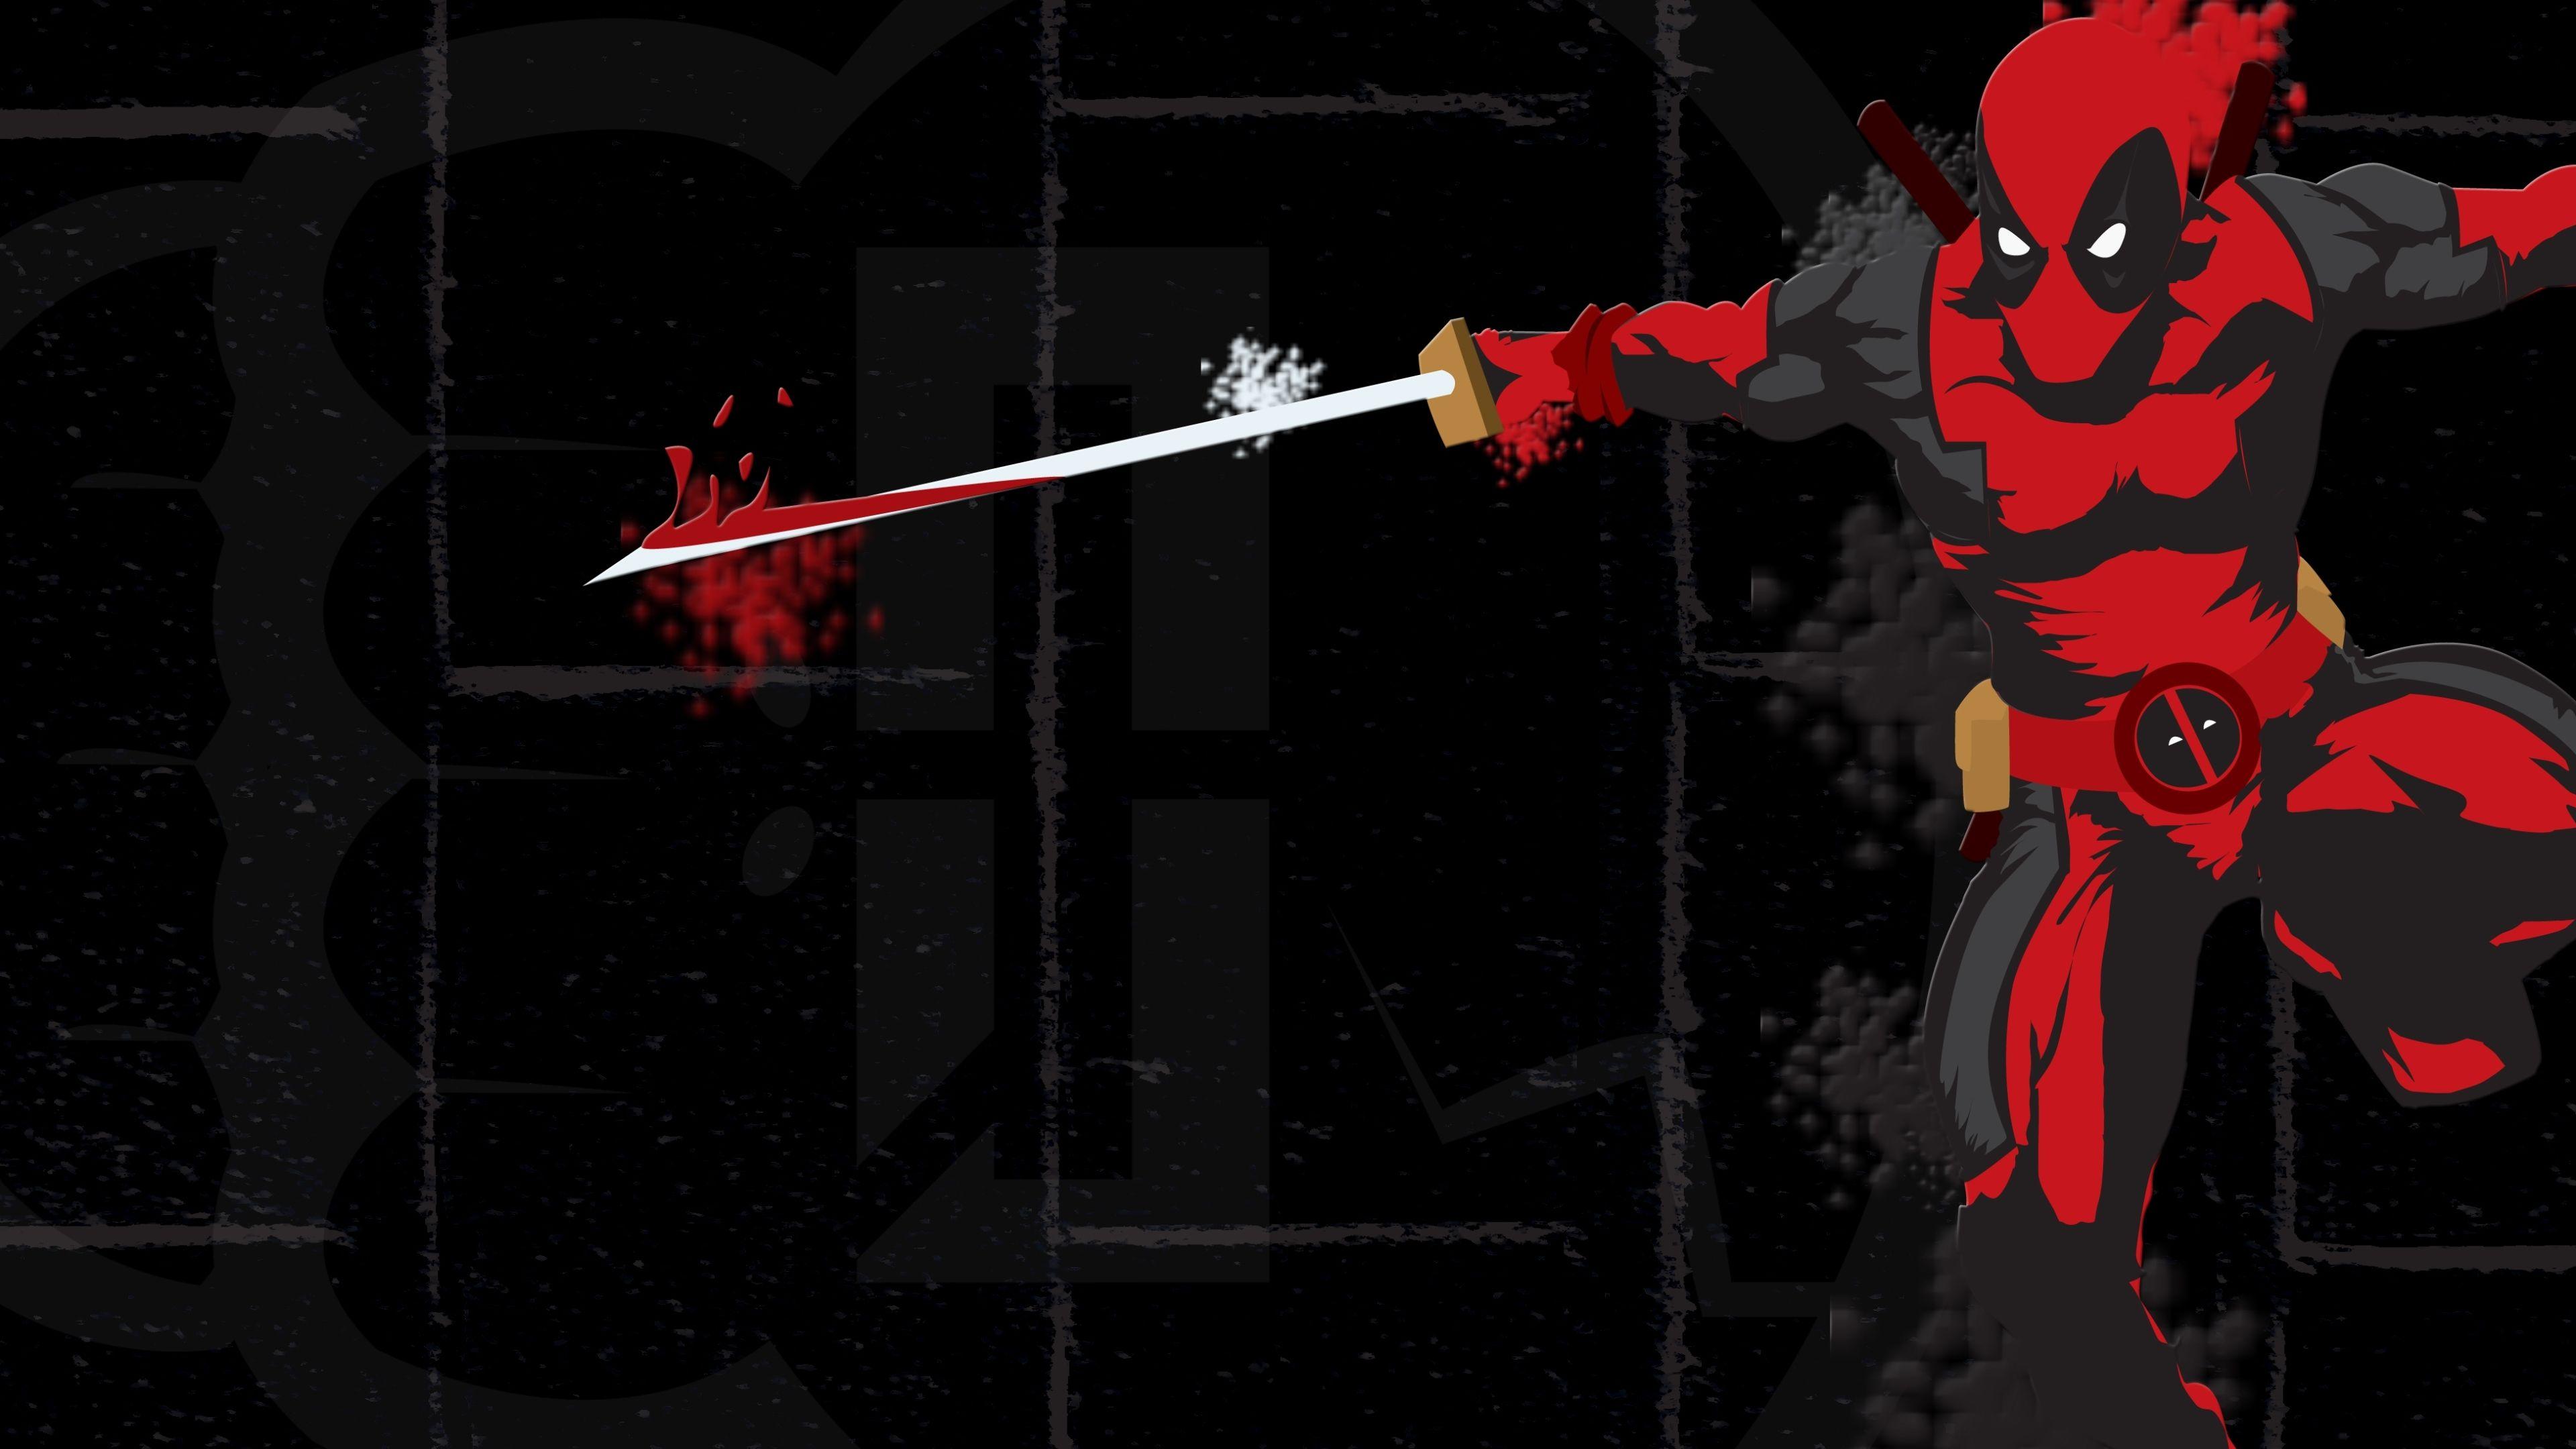 Deadpool [Marvel] 4K UHD 16:9 3840x2160 Wallpaper. UHD WALLPAPERS.EU